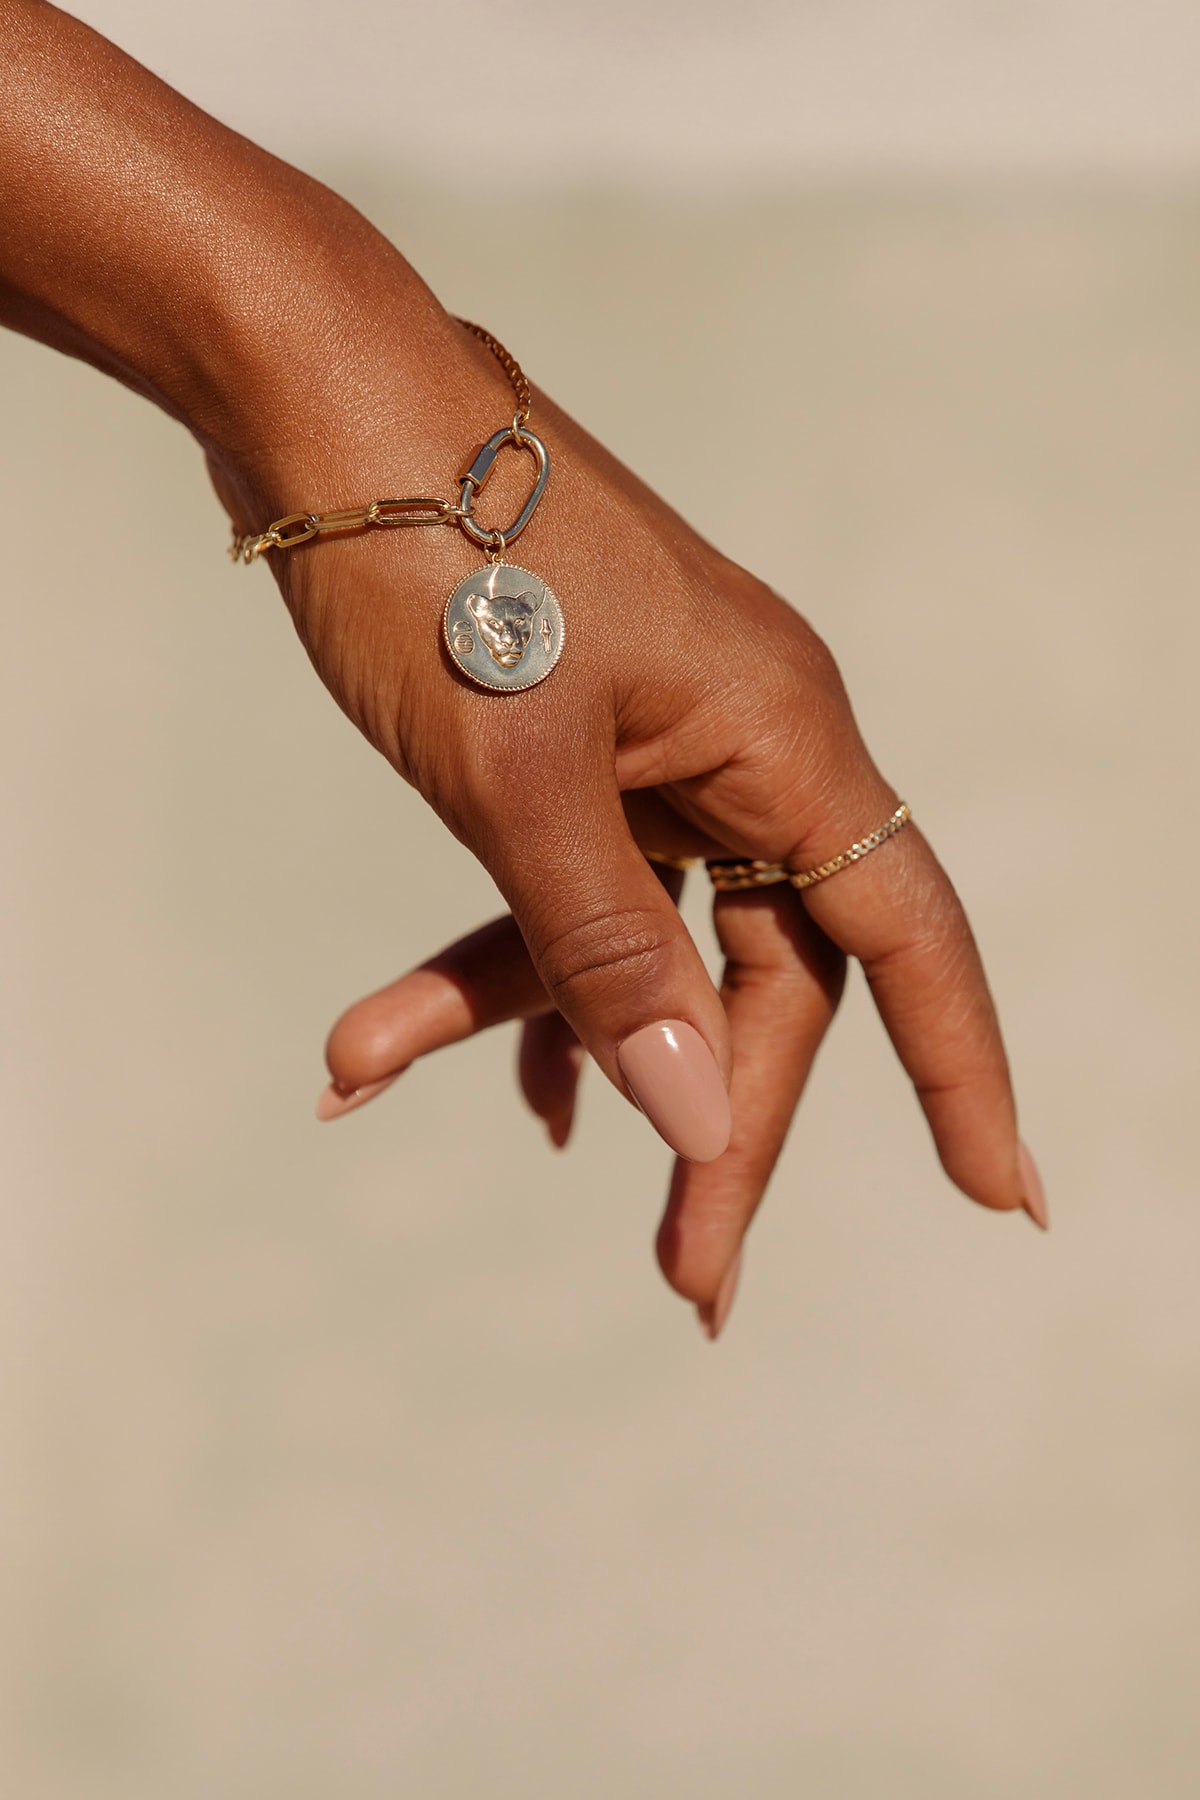 Kerry Washington x Aurate Jewelry Collaboration Bracelet Lioness